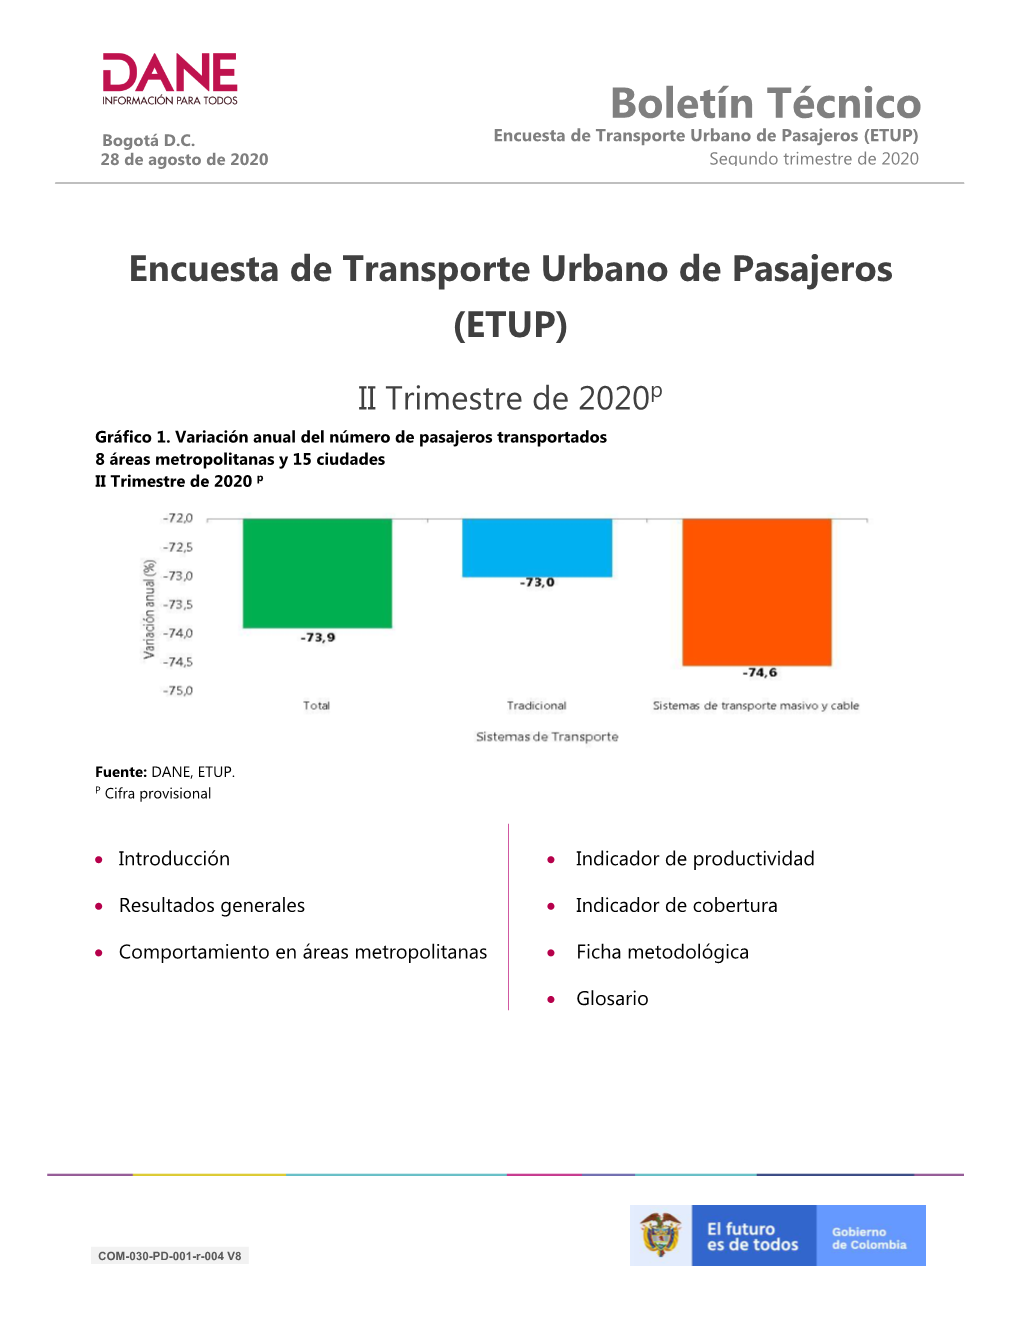 Boletín Técnico Encuesta De Transporte Urbano De Pasajeros (ETUP) Segundo Trimestre De 2020 INTRODUCCIÓN